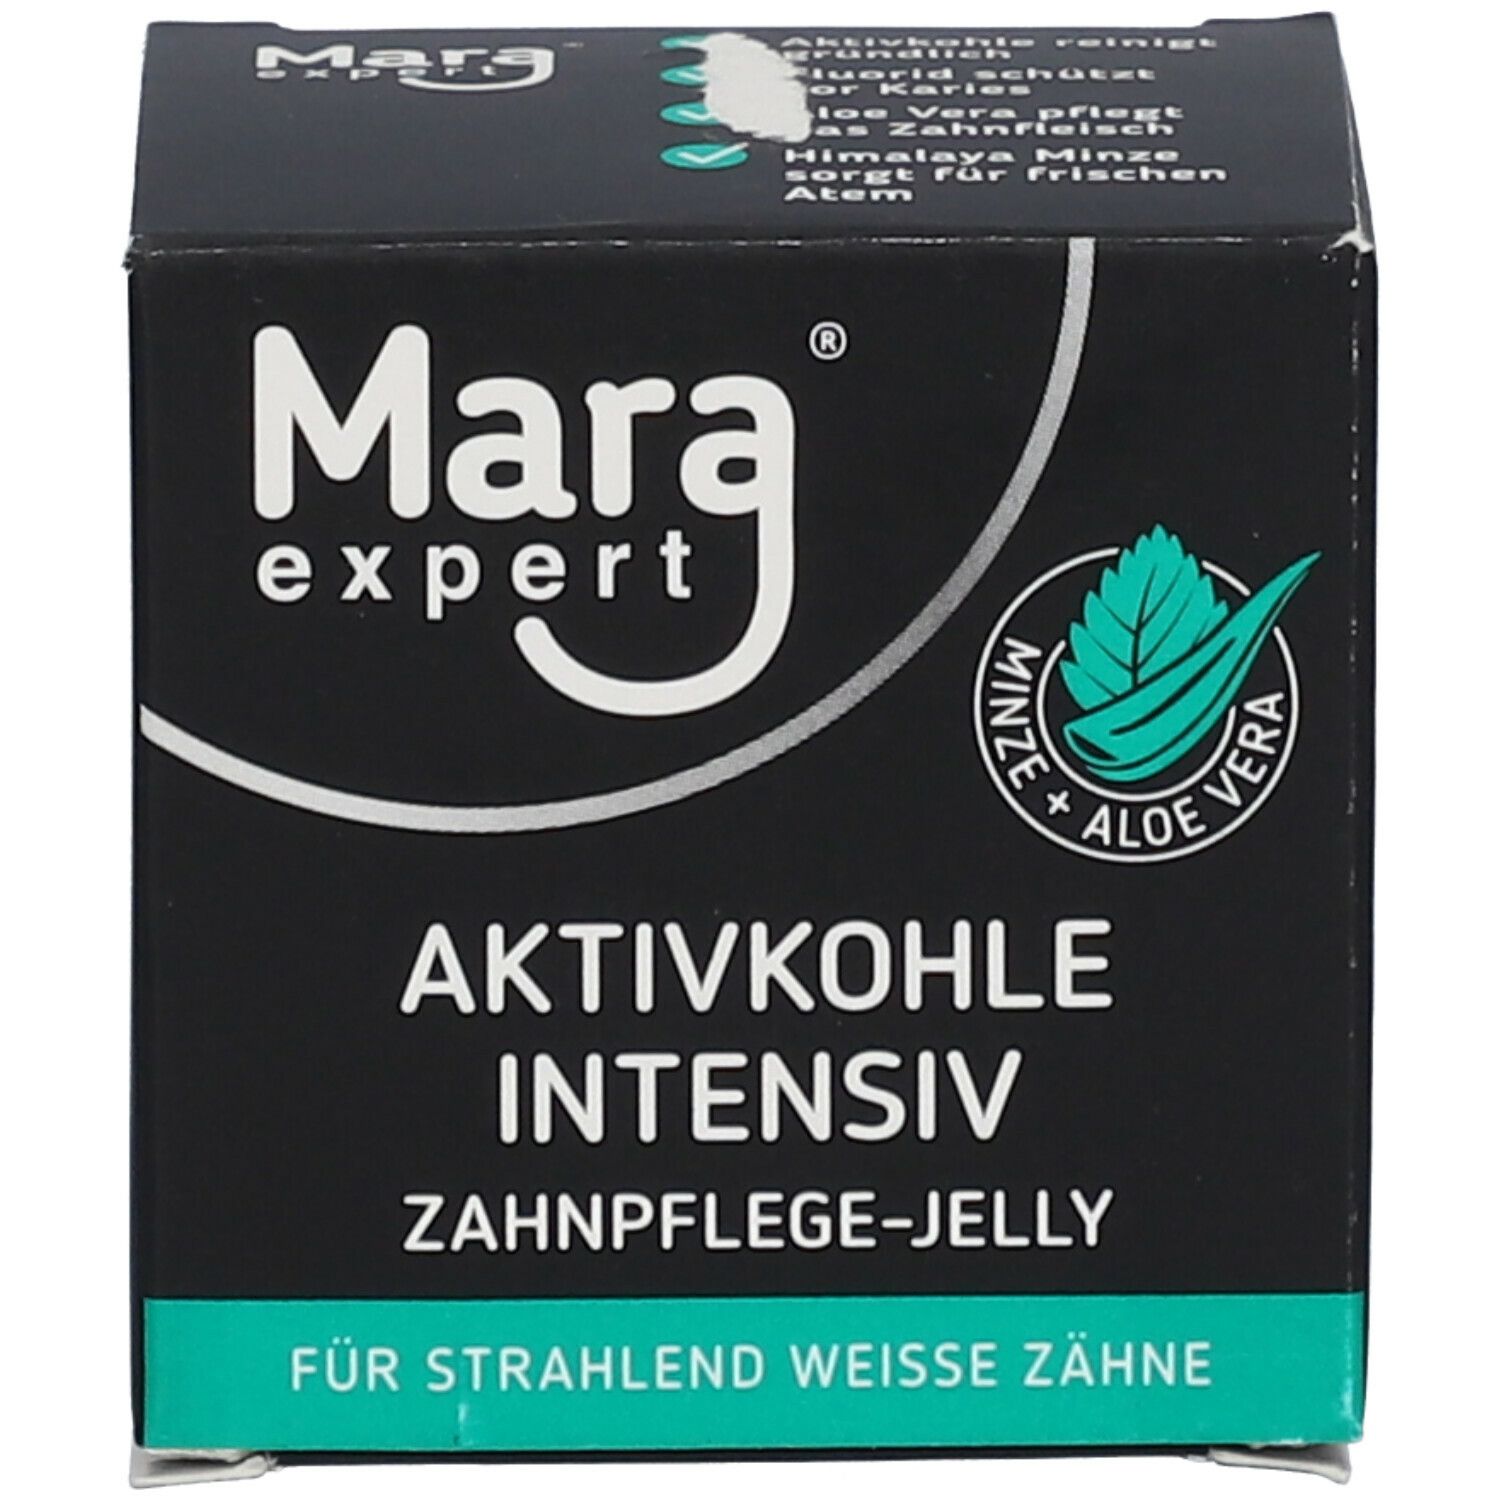 Mara® expert Aktivkohle Intensiv Gelee